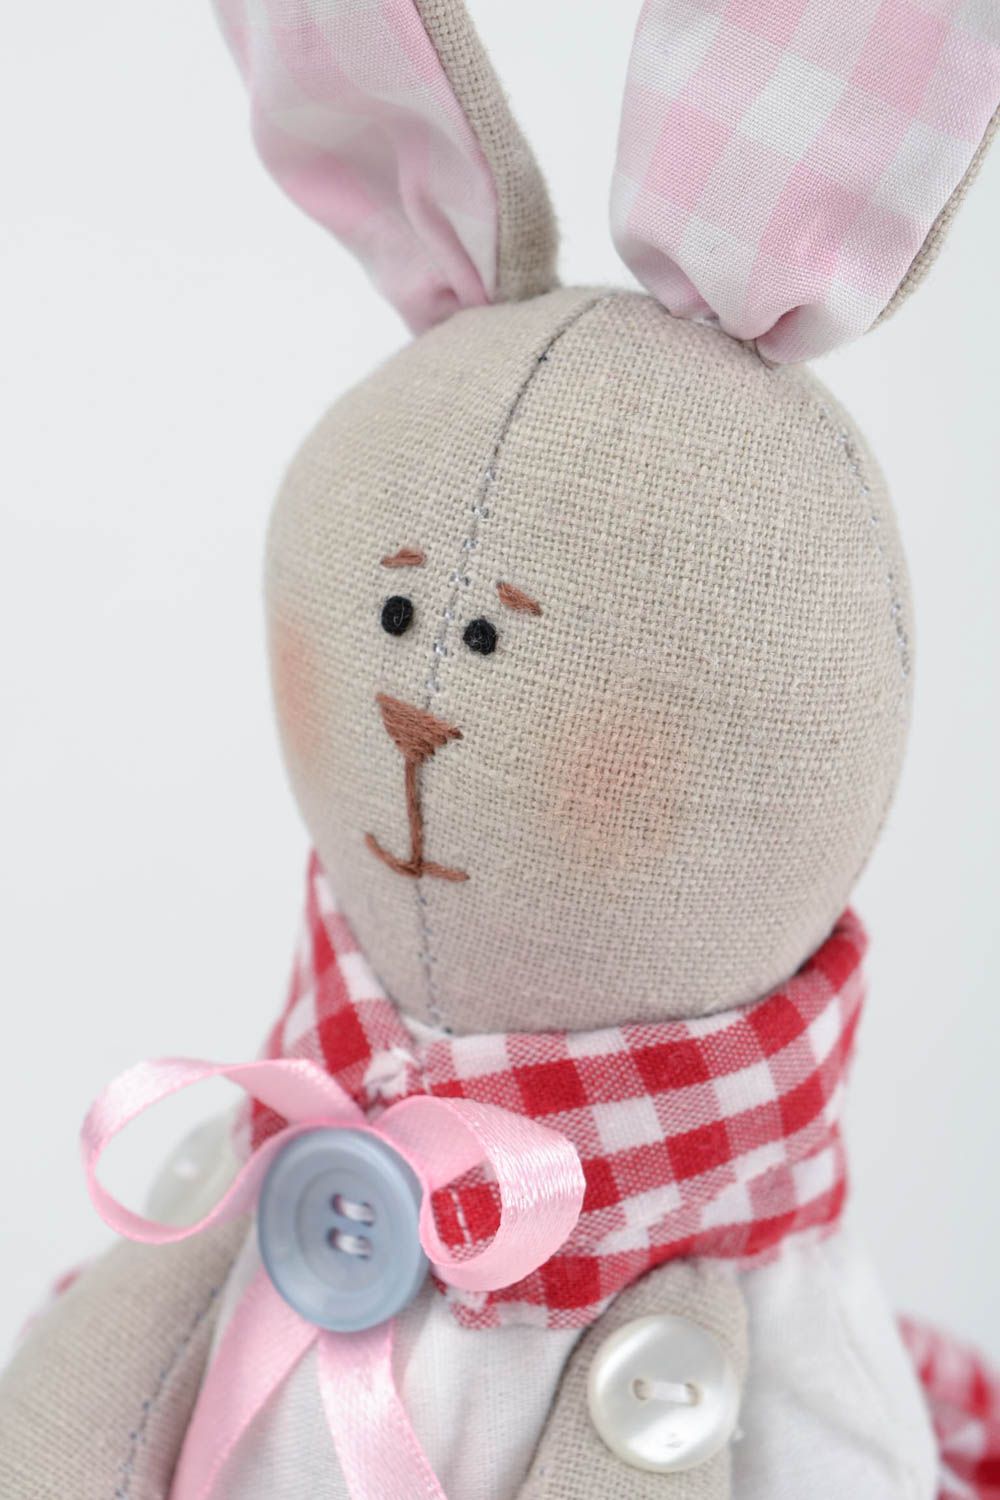 Stuffed toy rabbit toy homemade crafts handmade toys nursery decor kids gifts photo 3